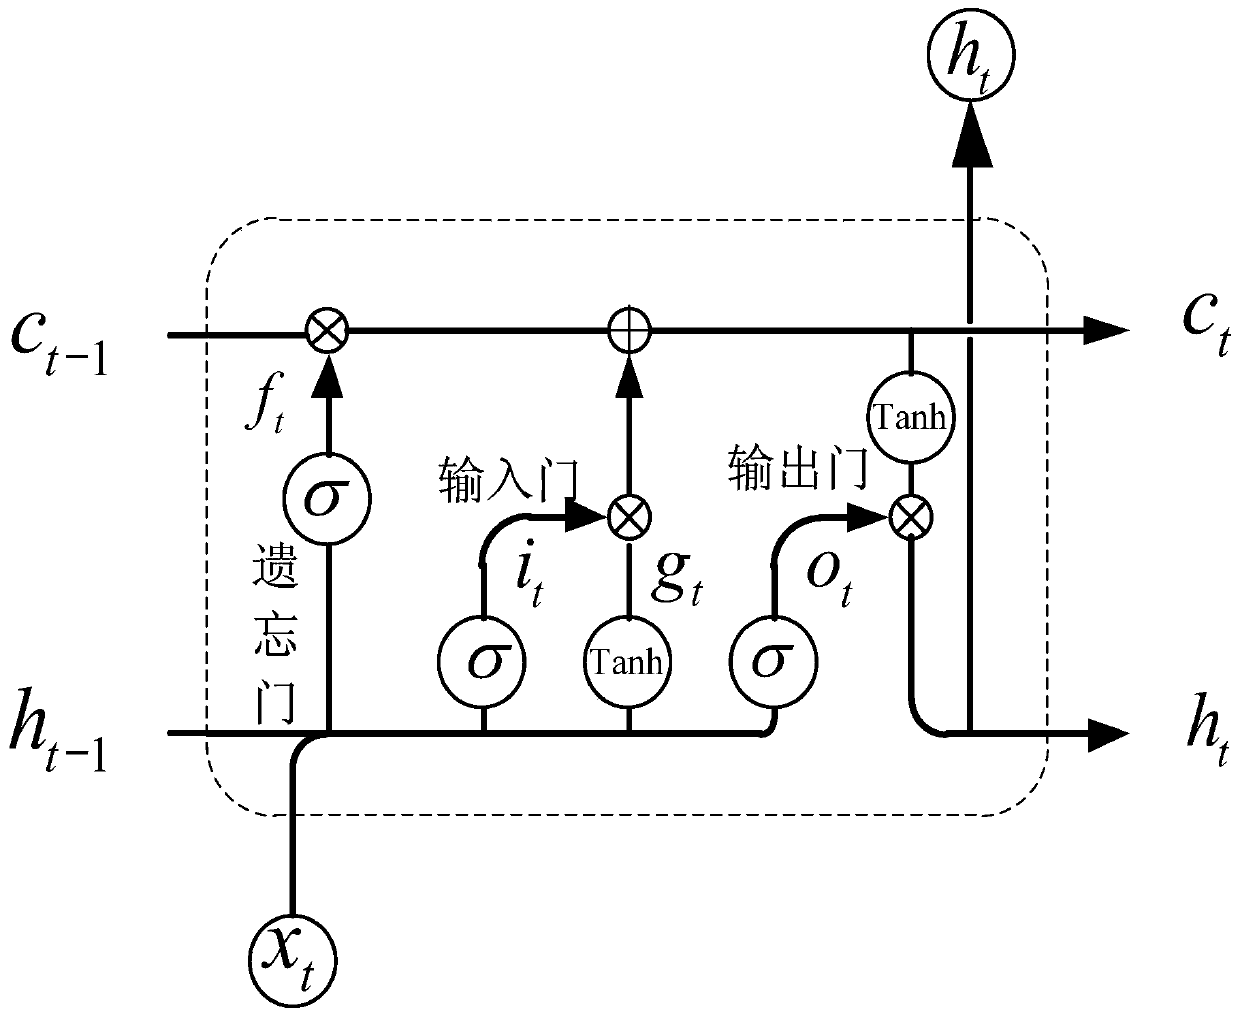 Rolling bearing residual life prediction method based on deep generative adversarial network